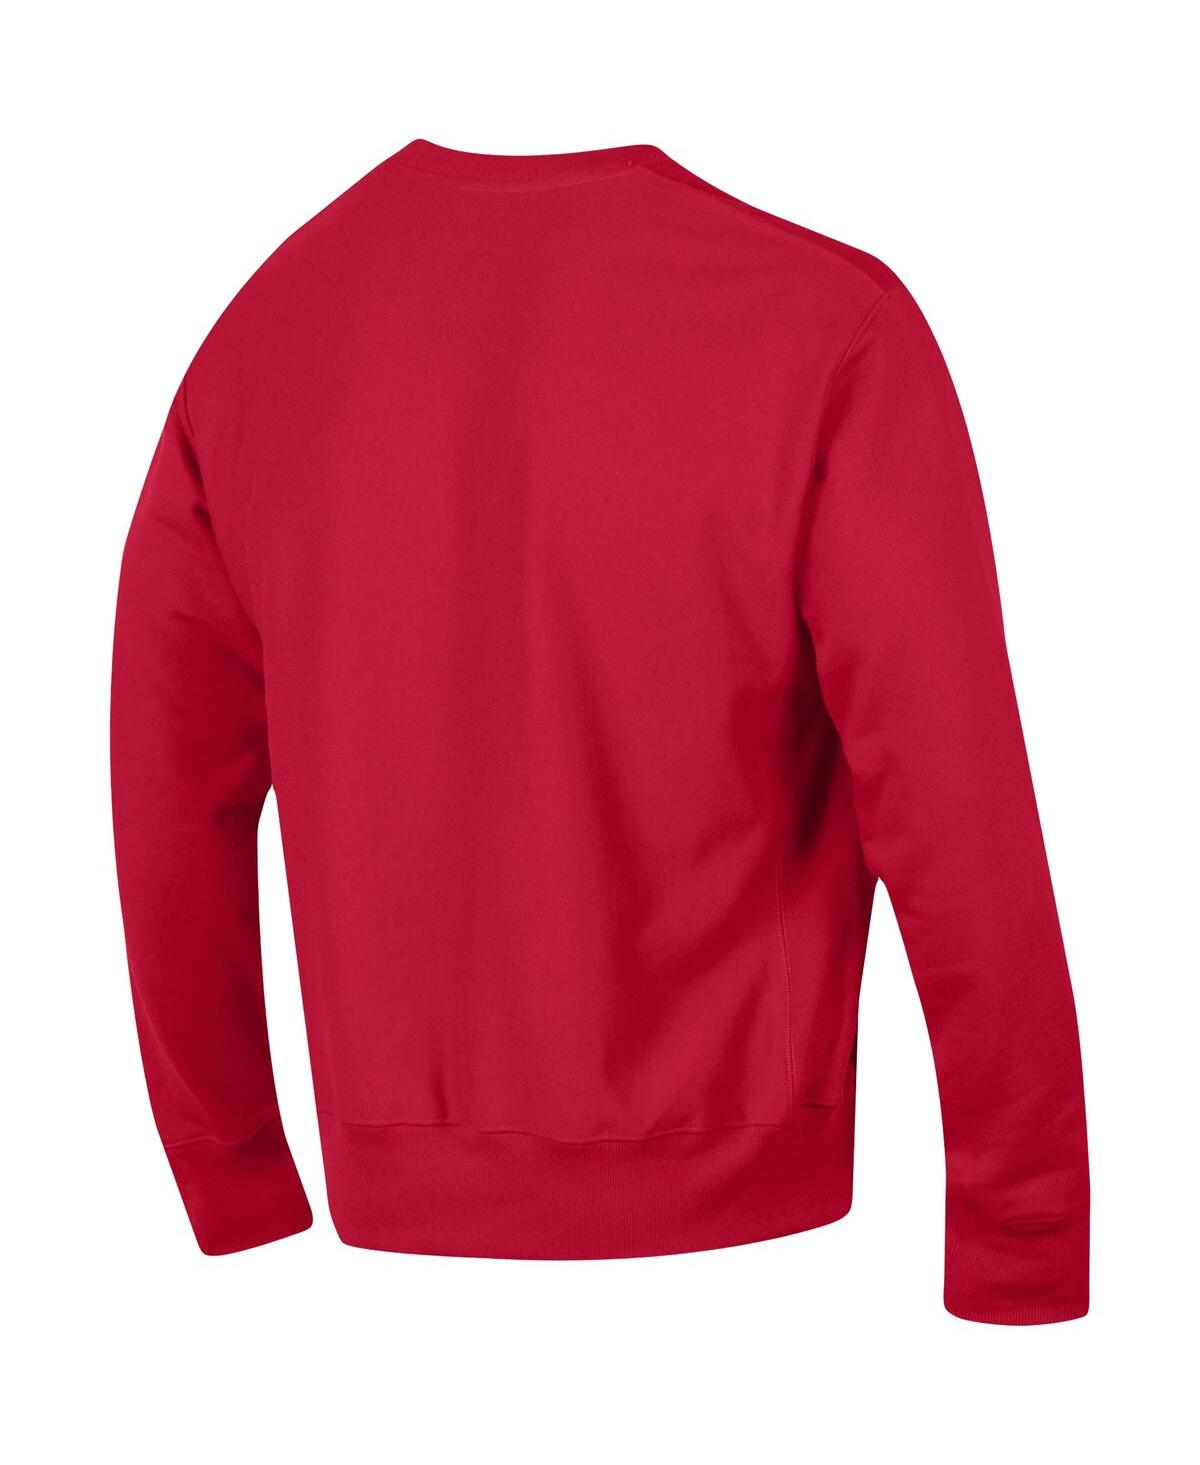 Shop Champion Men's  Red Georgia Bulldogs Arch Reverse Weave Pullover Sweatshirt